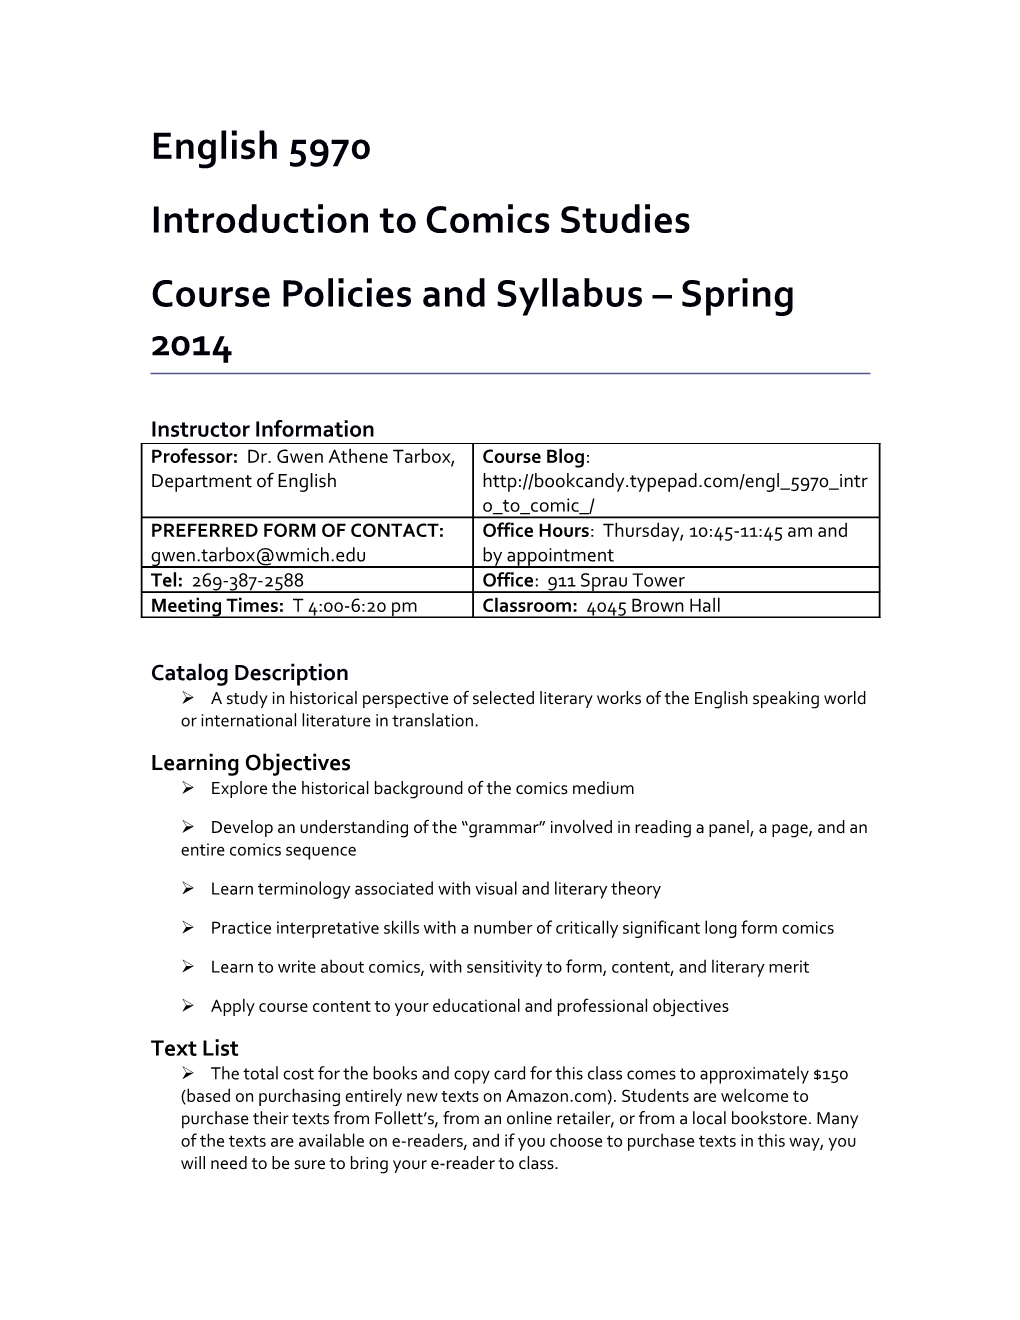 Course Policies and Syllabus Spring 2014